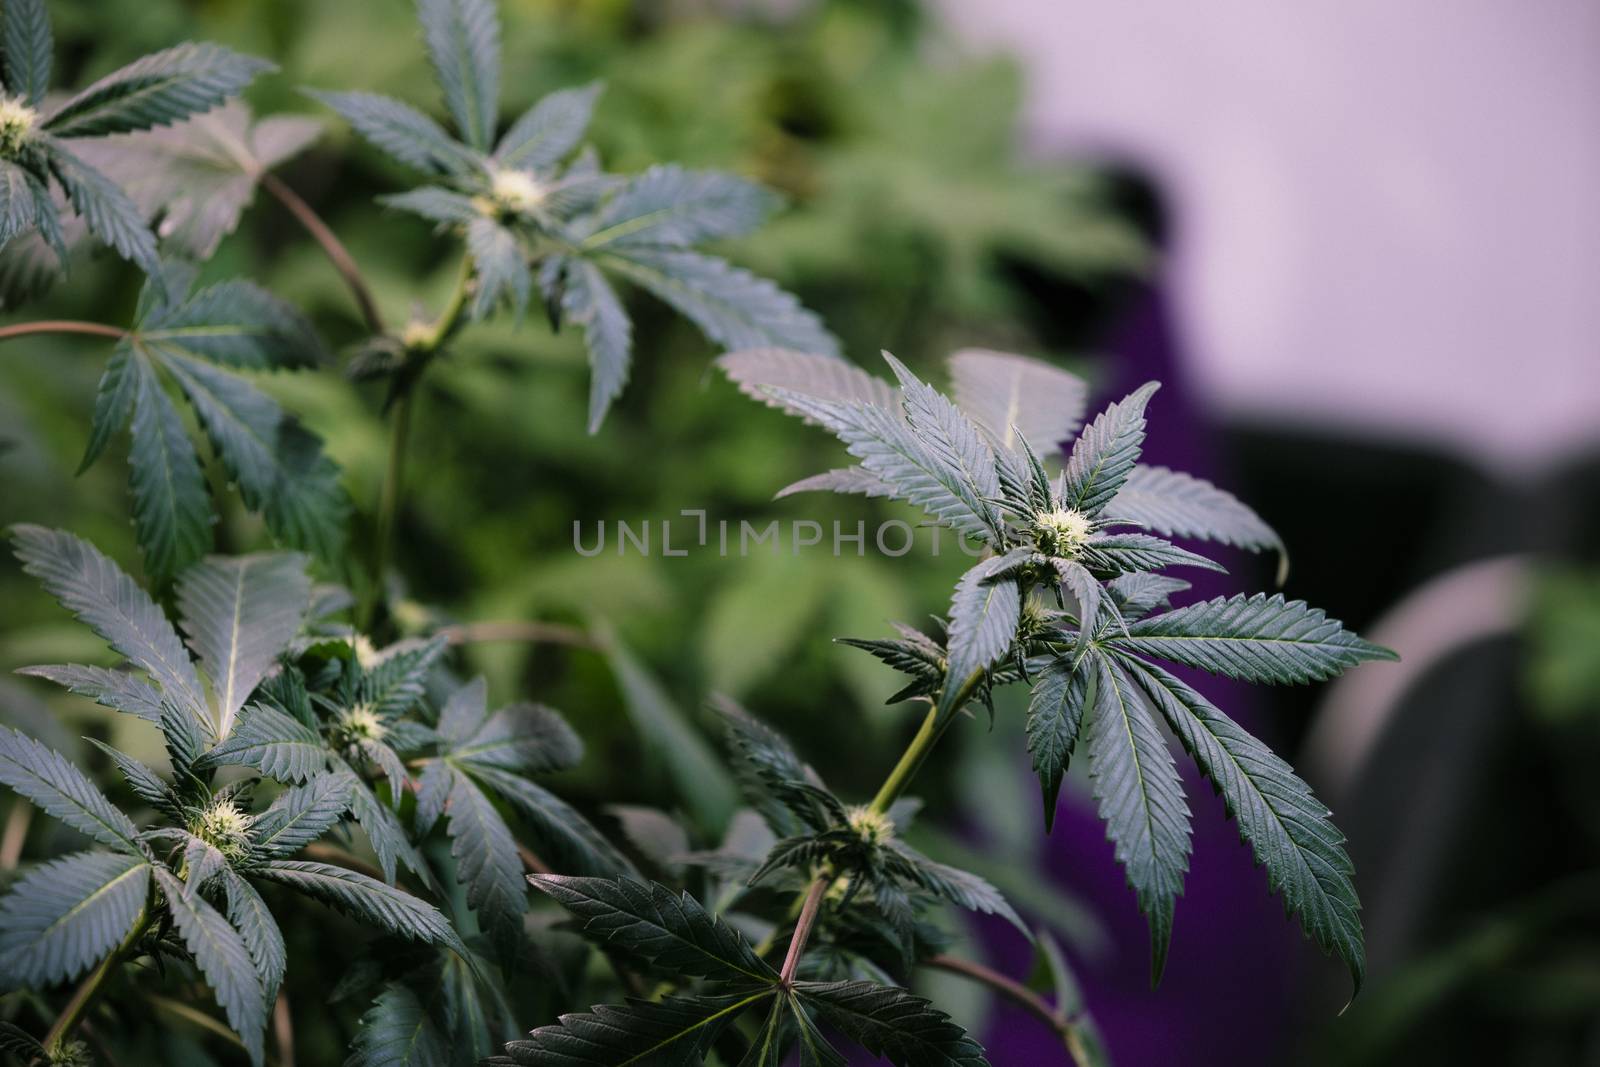 High angle view of cannabis marijuana leafs by Nemida